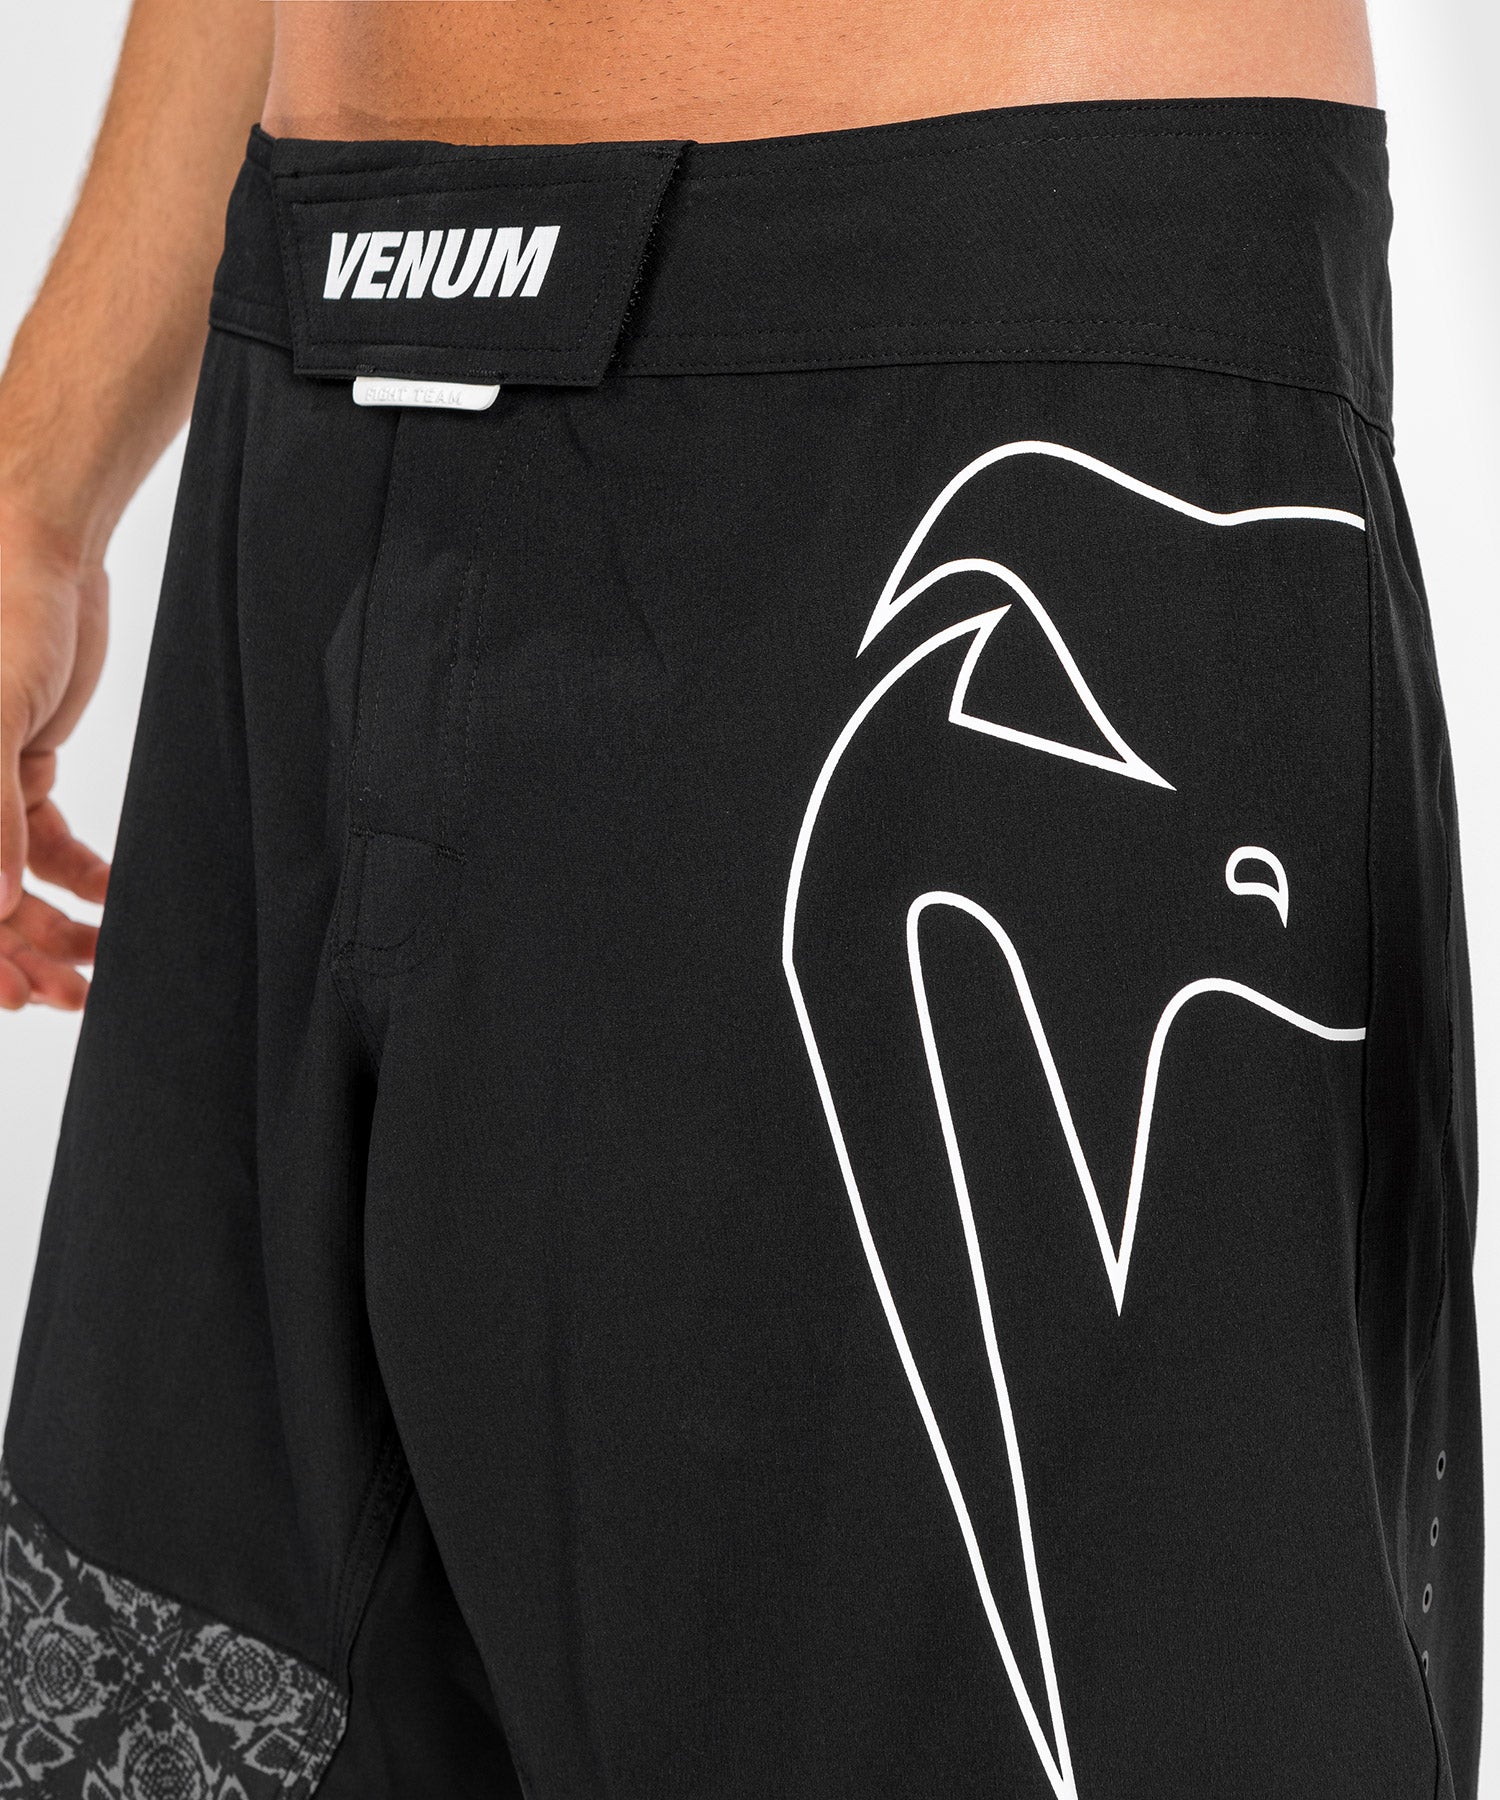 Venum Light 4.0 ファイトショーツ - ブラック/ホワイト